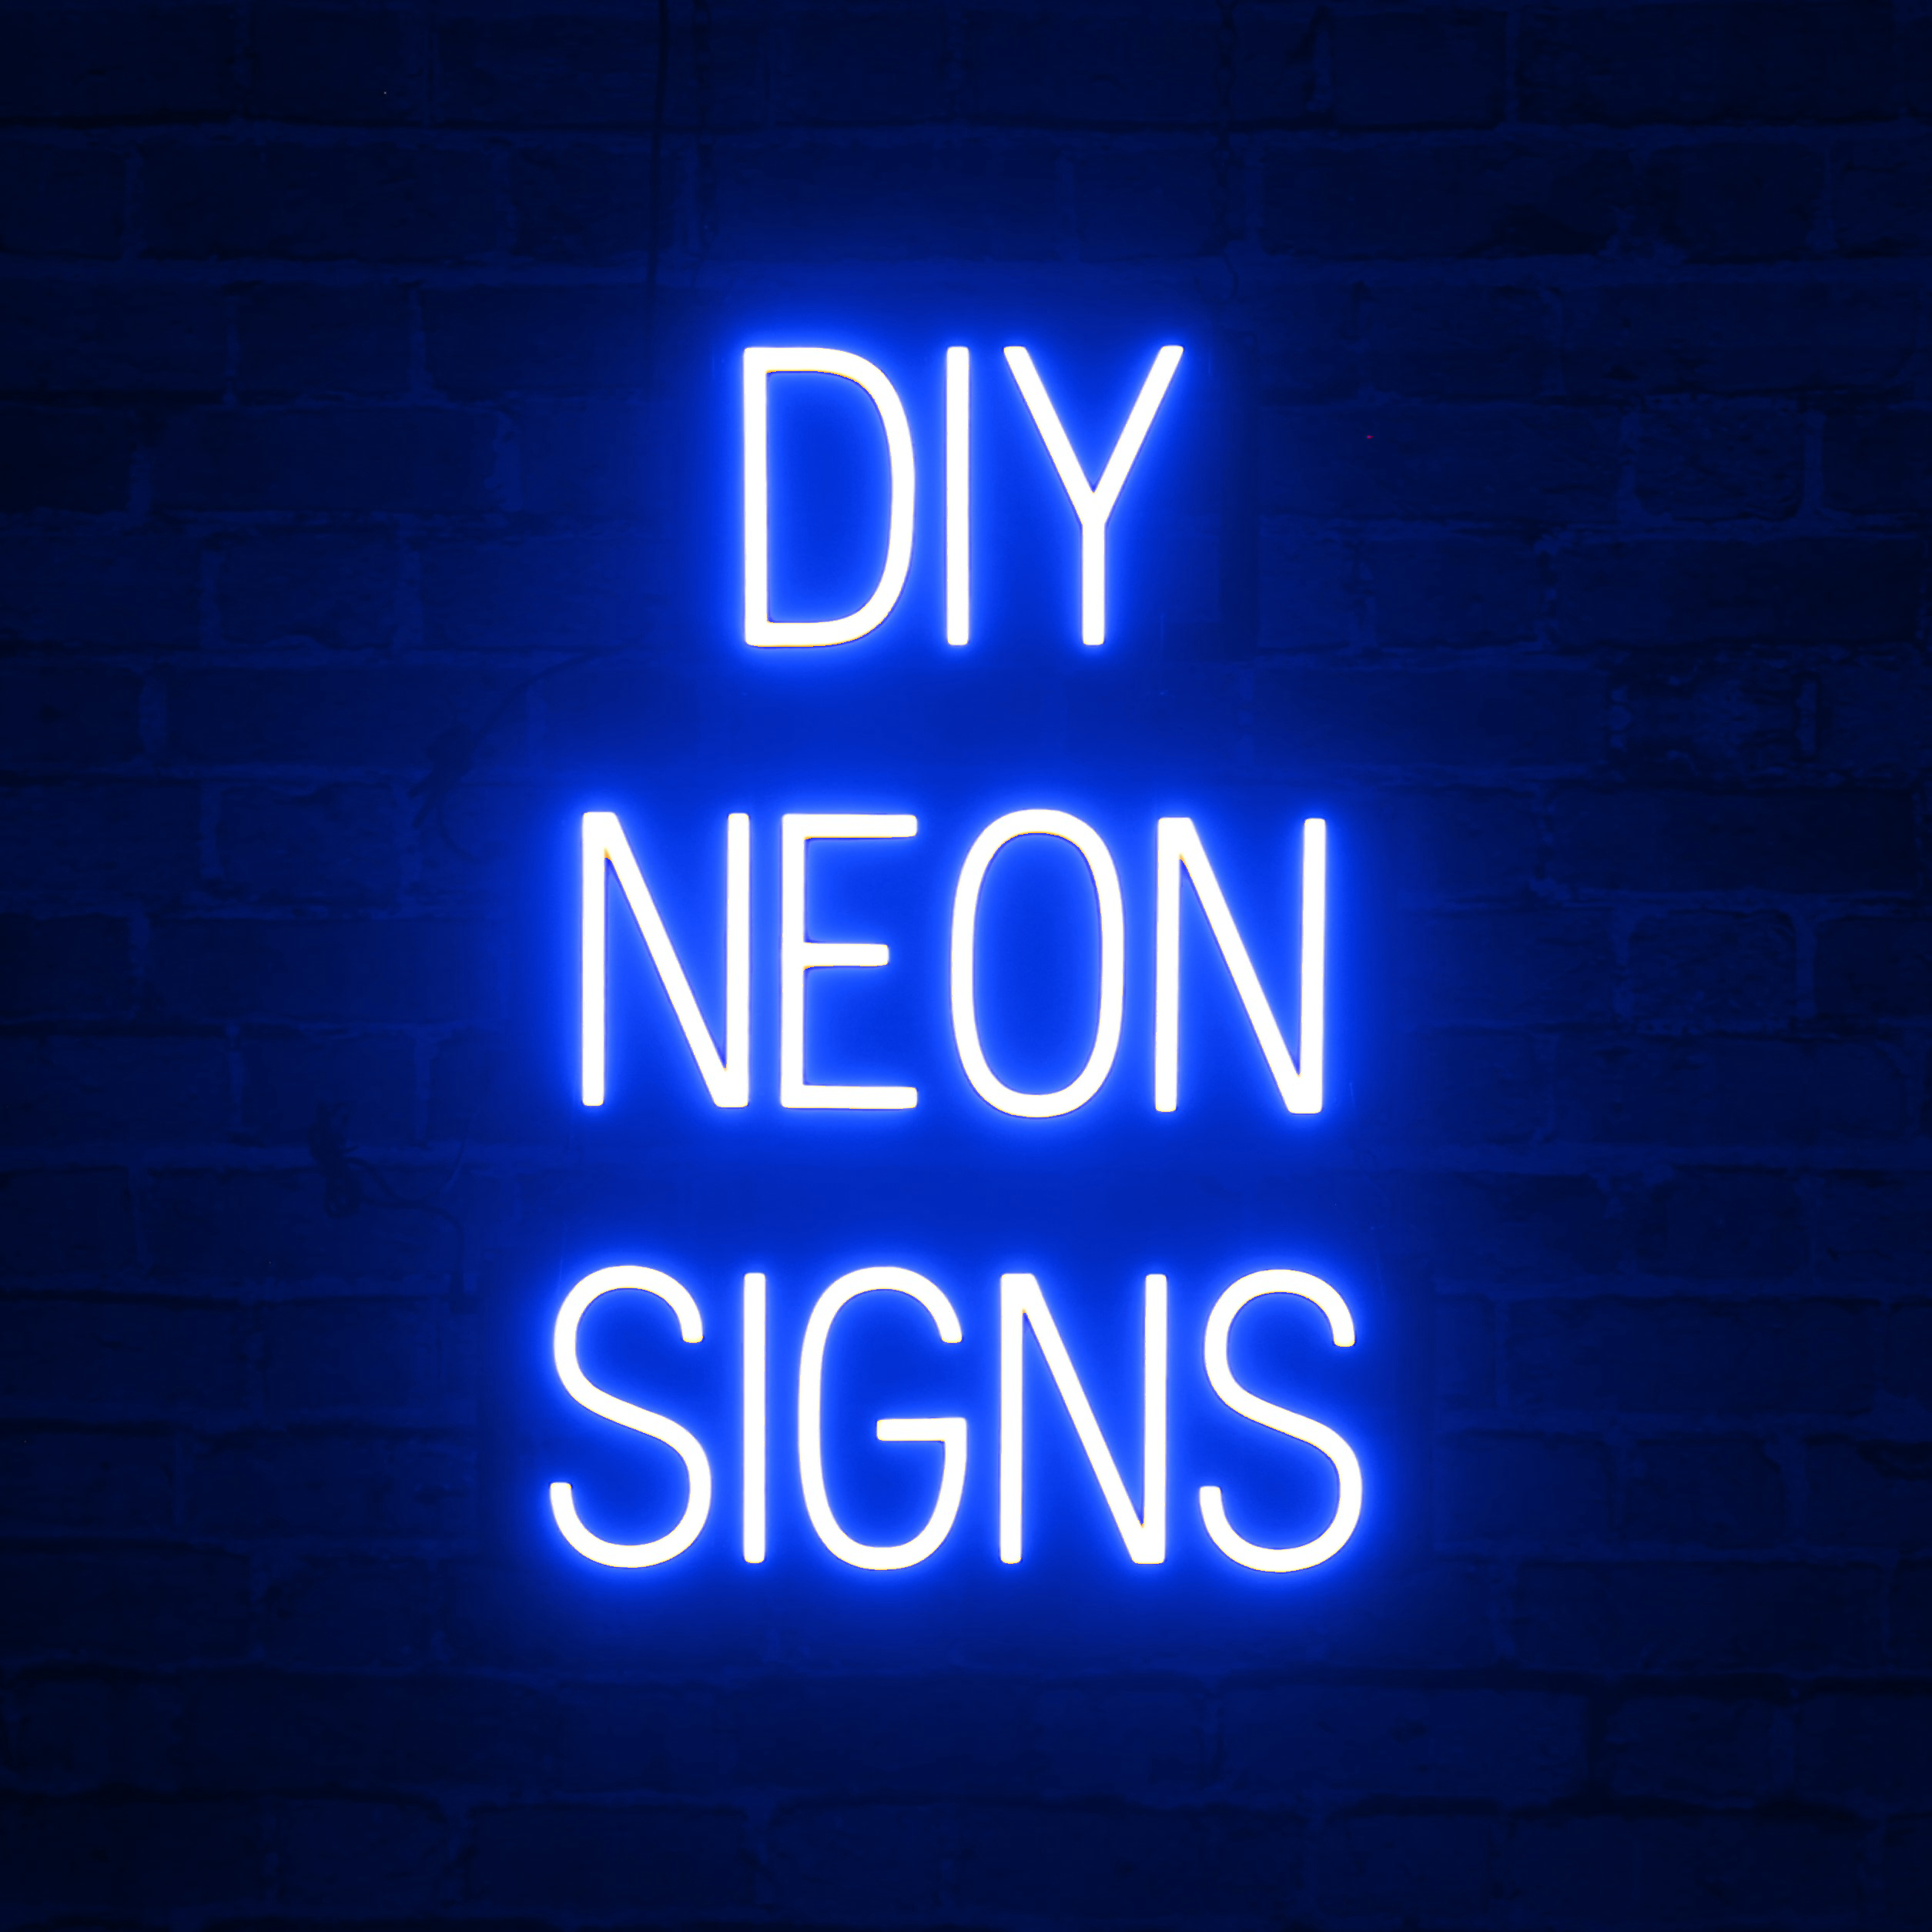 DIY Neon Sign, Custom Image of SpellBrite’s DIY LED Signs